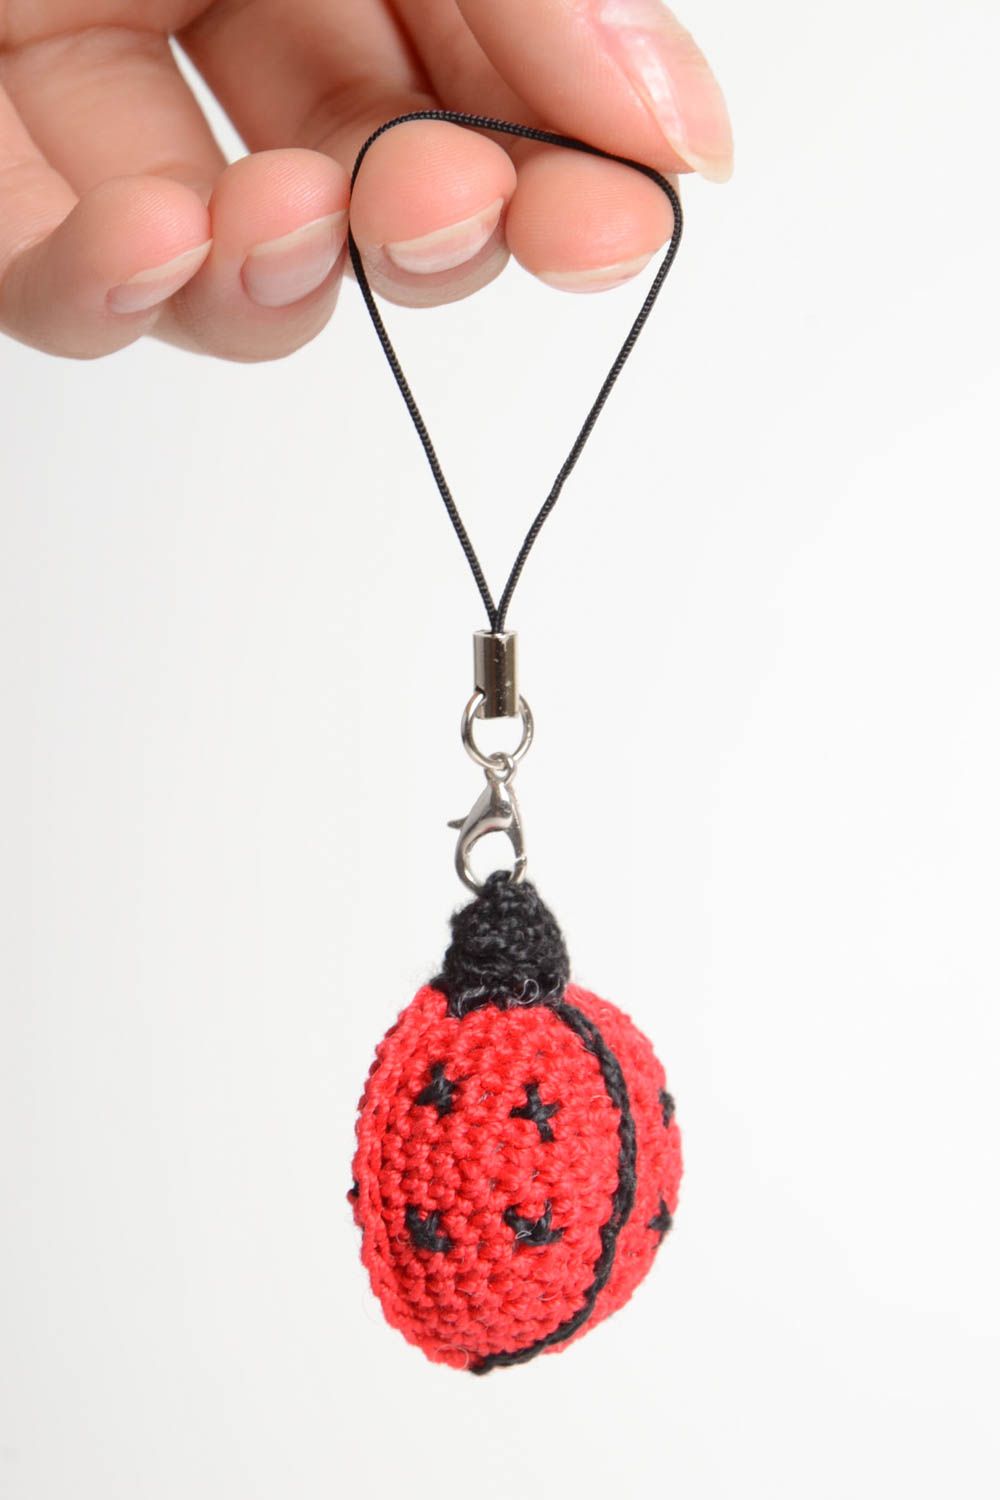 Popular handmade keychain crochet soft keychain toy phone charm gift ideas photo 5